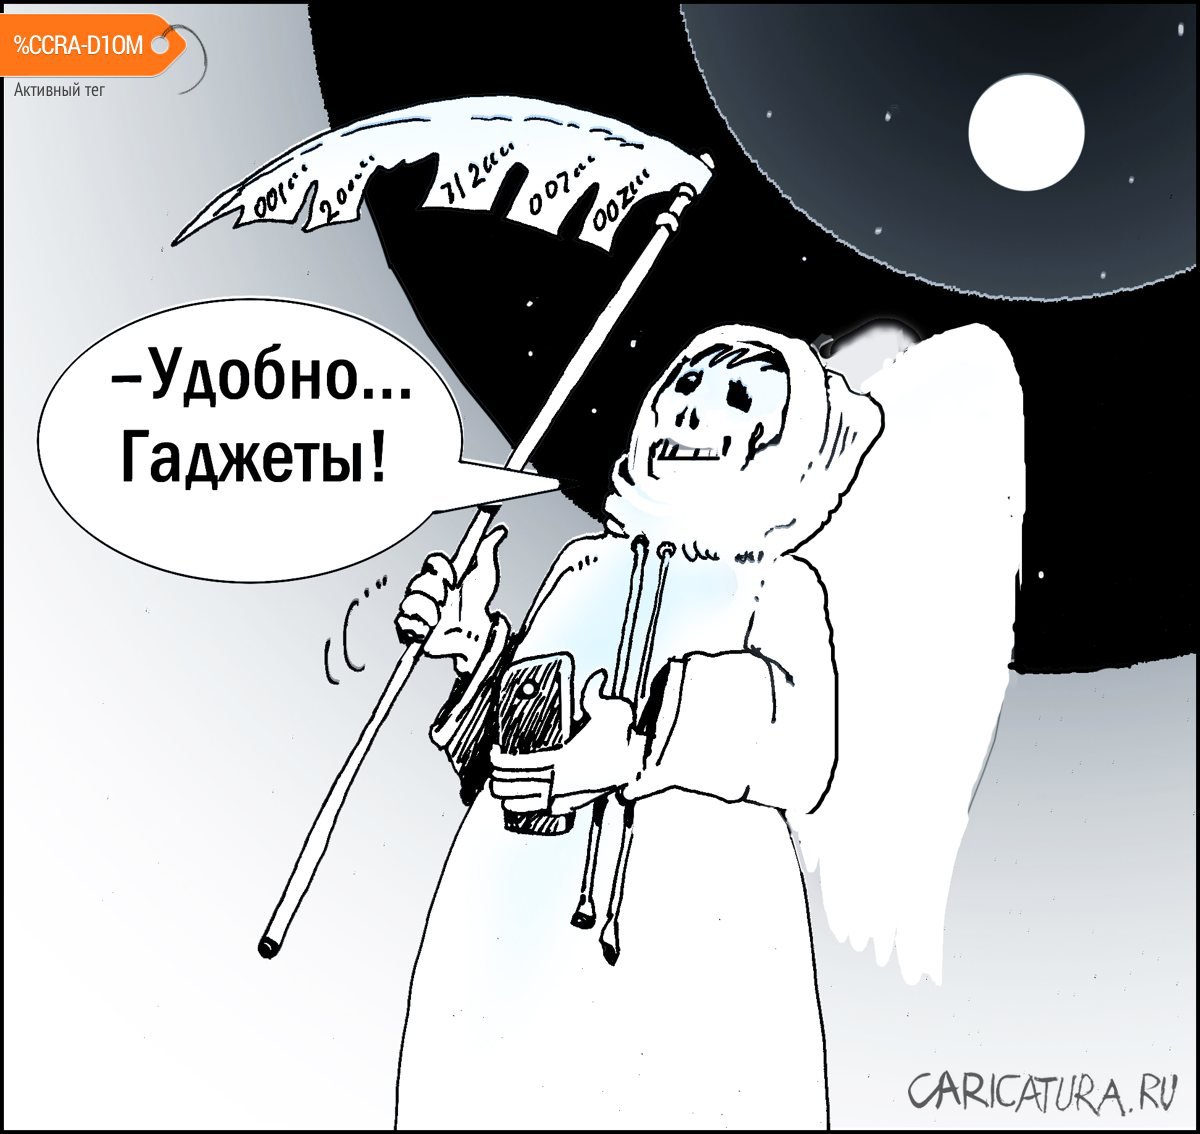 Карикатура "Дистанционка", Александр Уваров